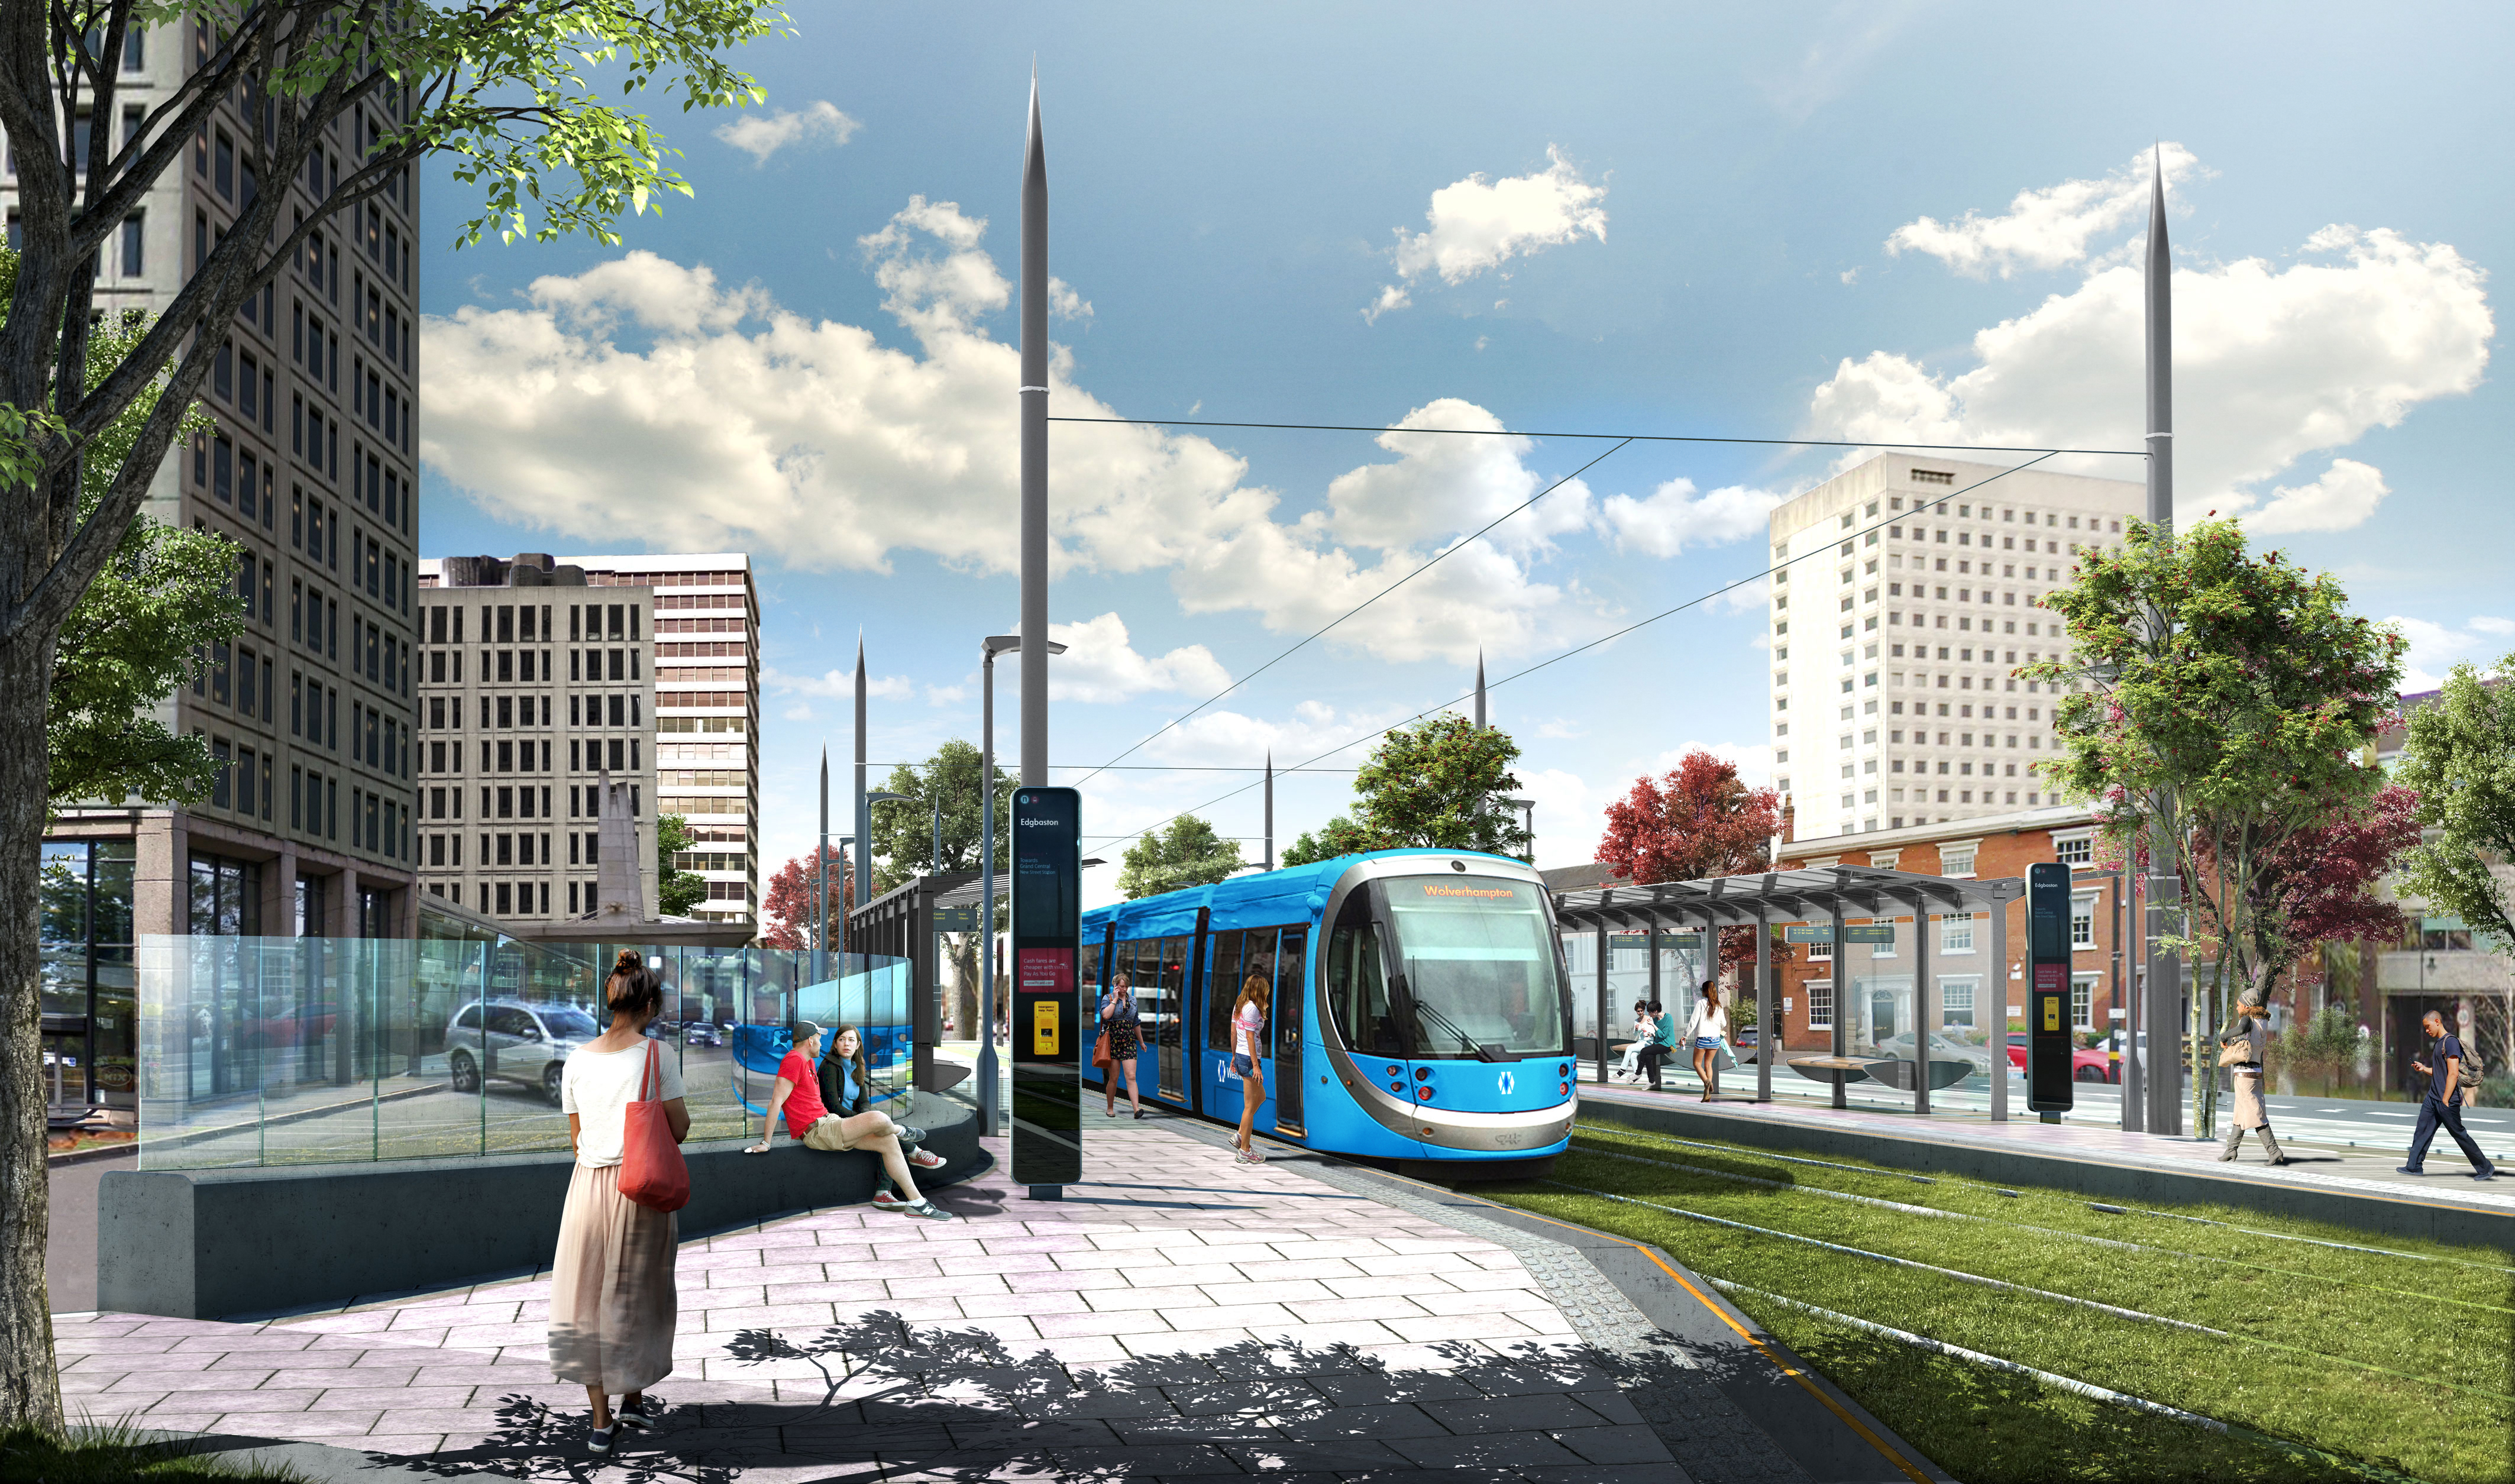 Extension of West Midlands Metro to Edgbaston Five Ways